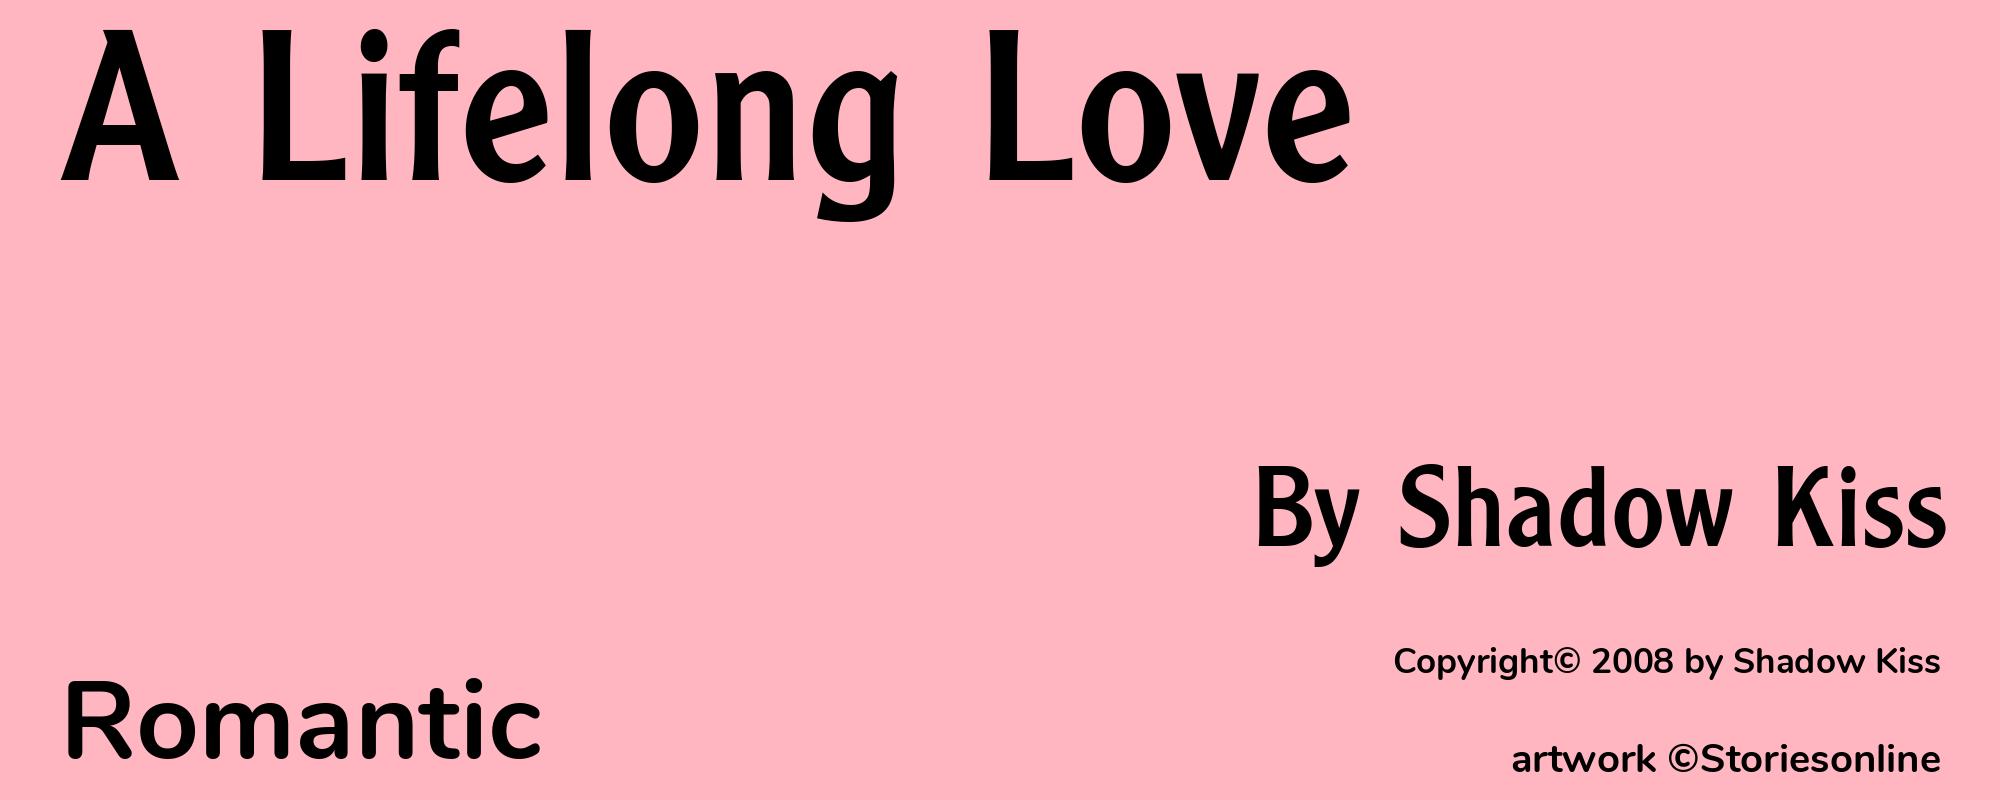 A Lifelong Love - Cover